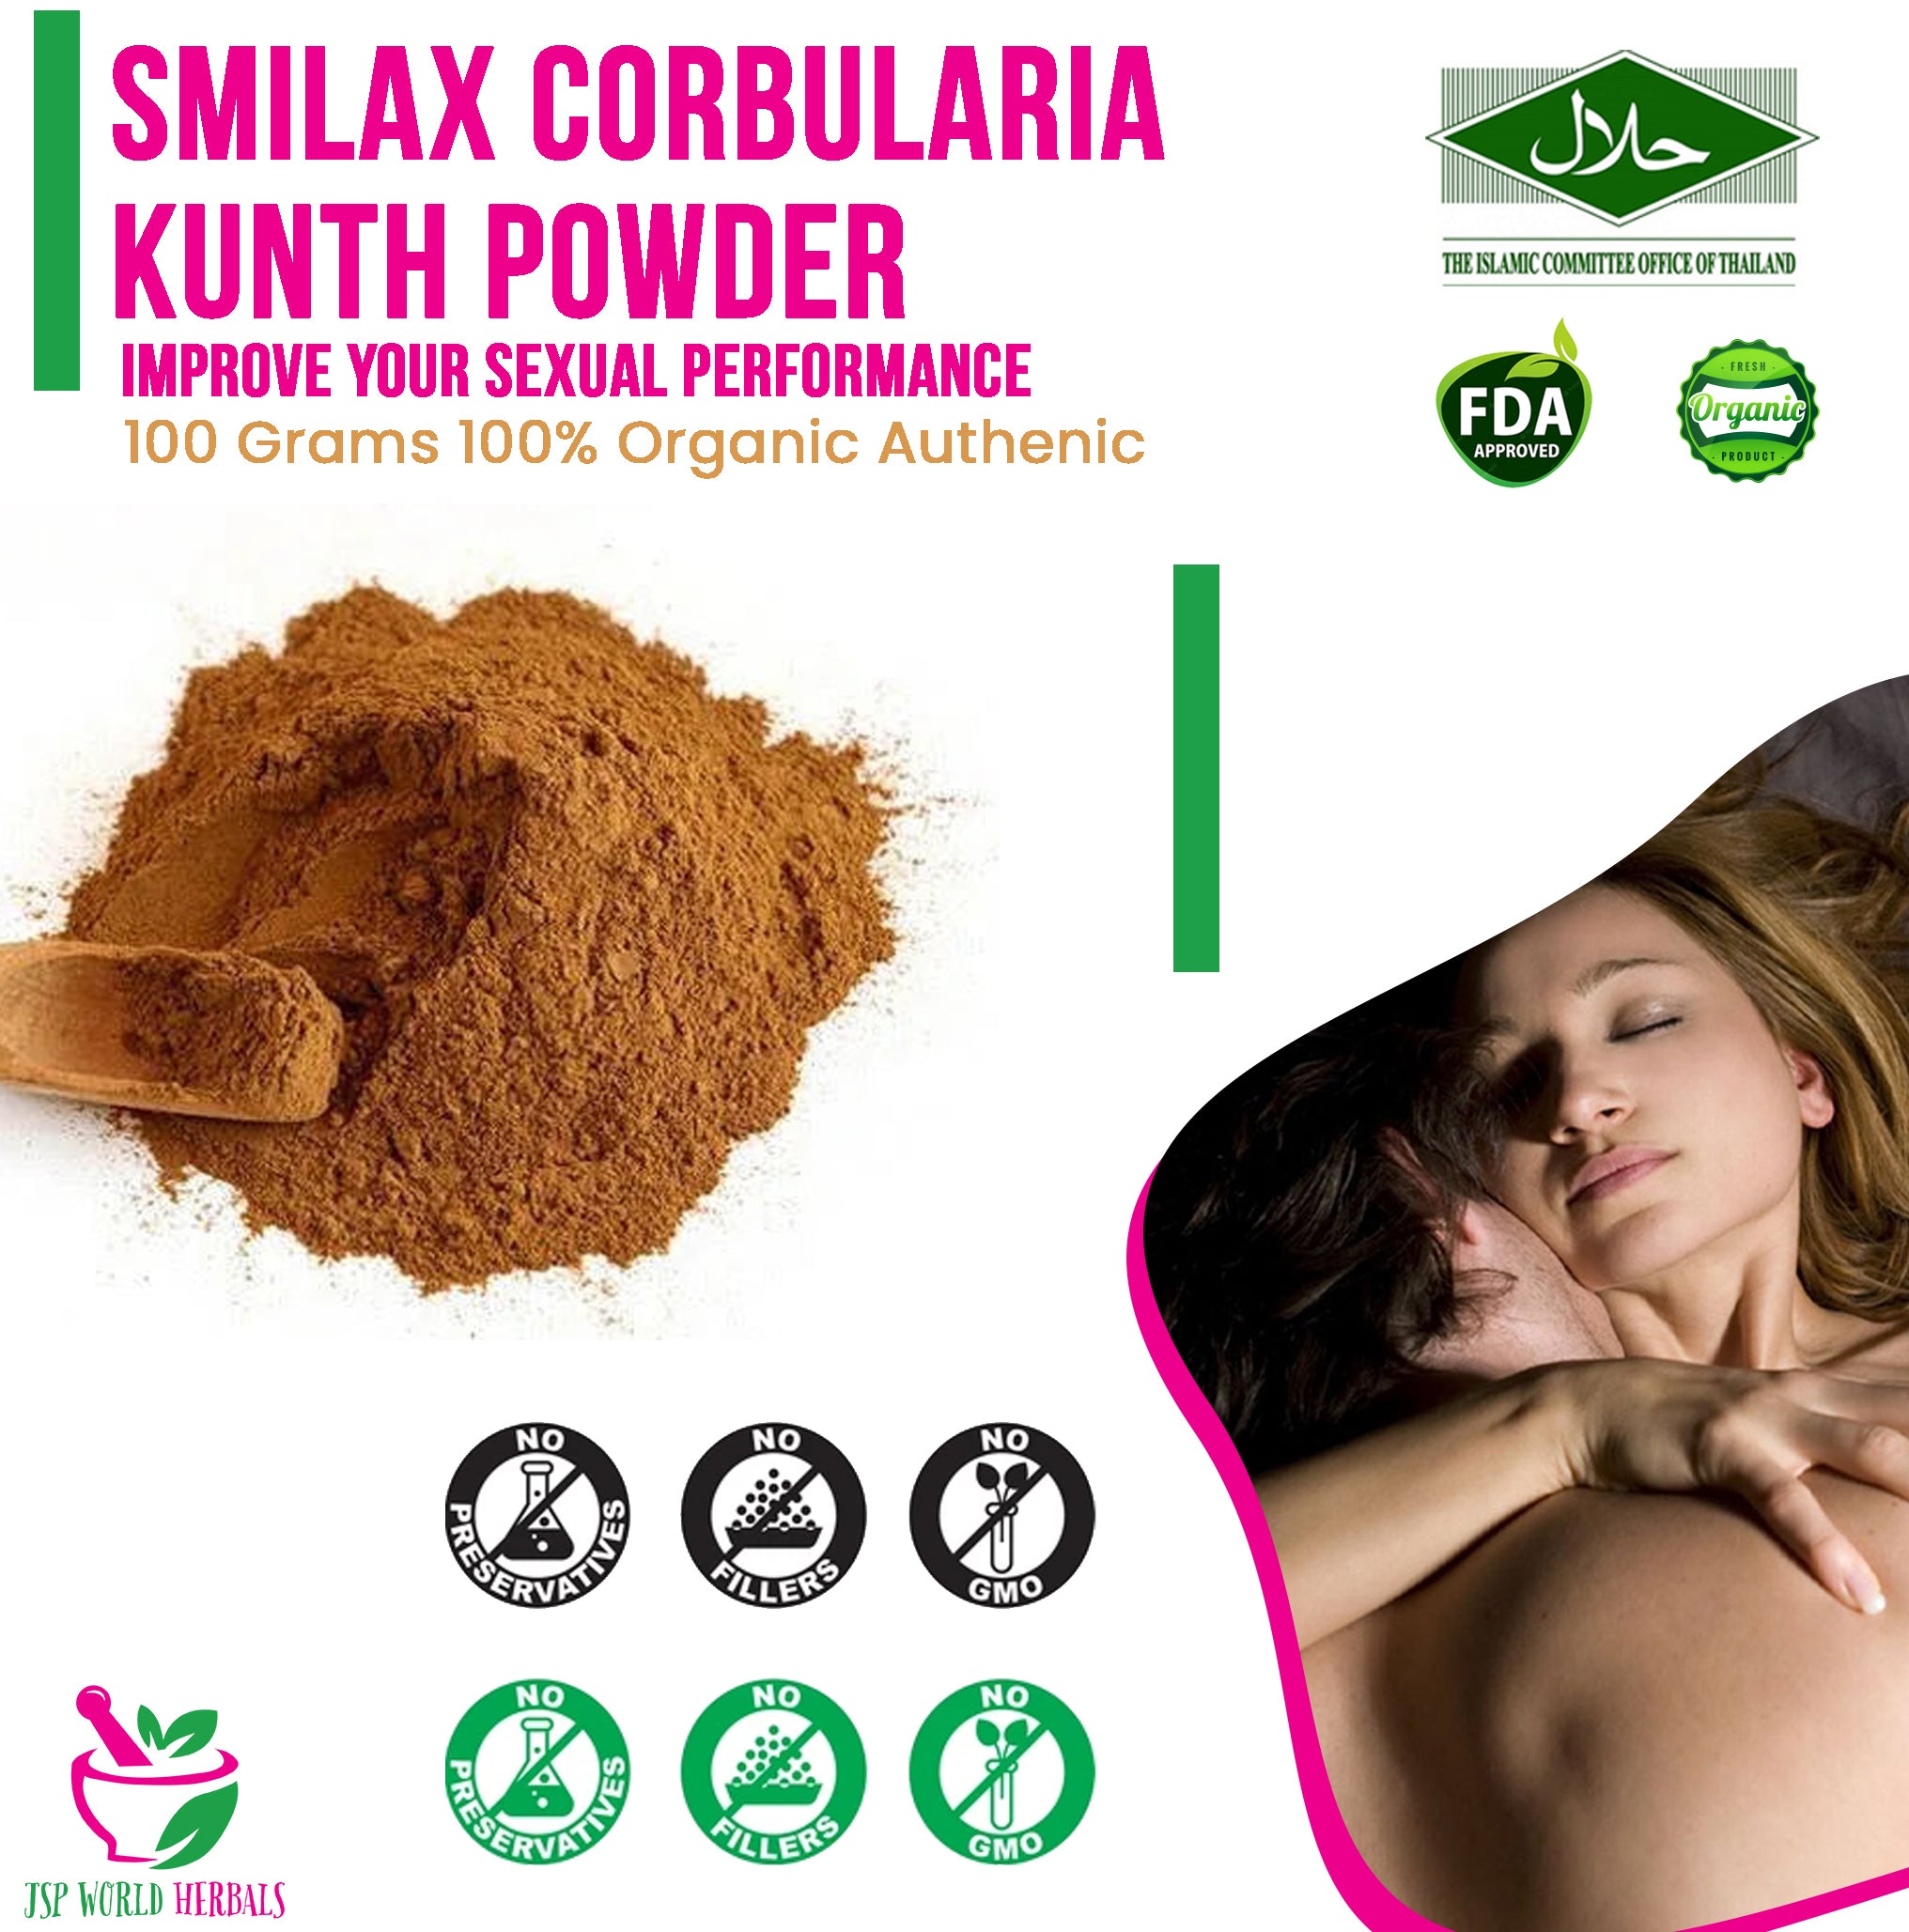 Smilax Corbularia Kunth Powder 100 Grams 100% Organic Authenic